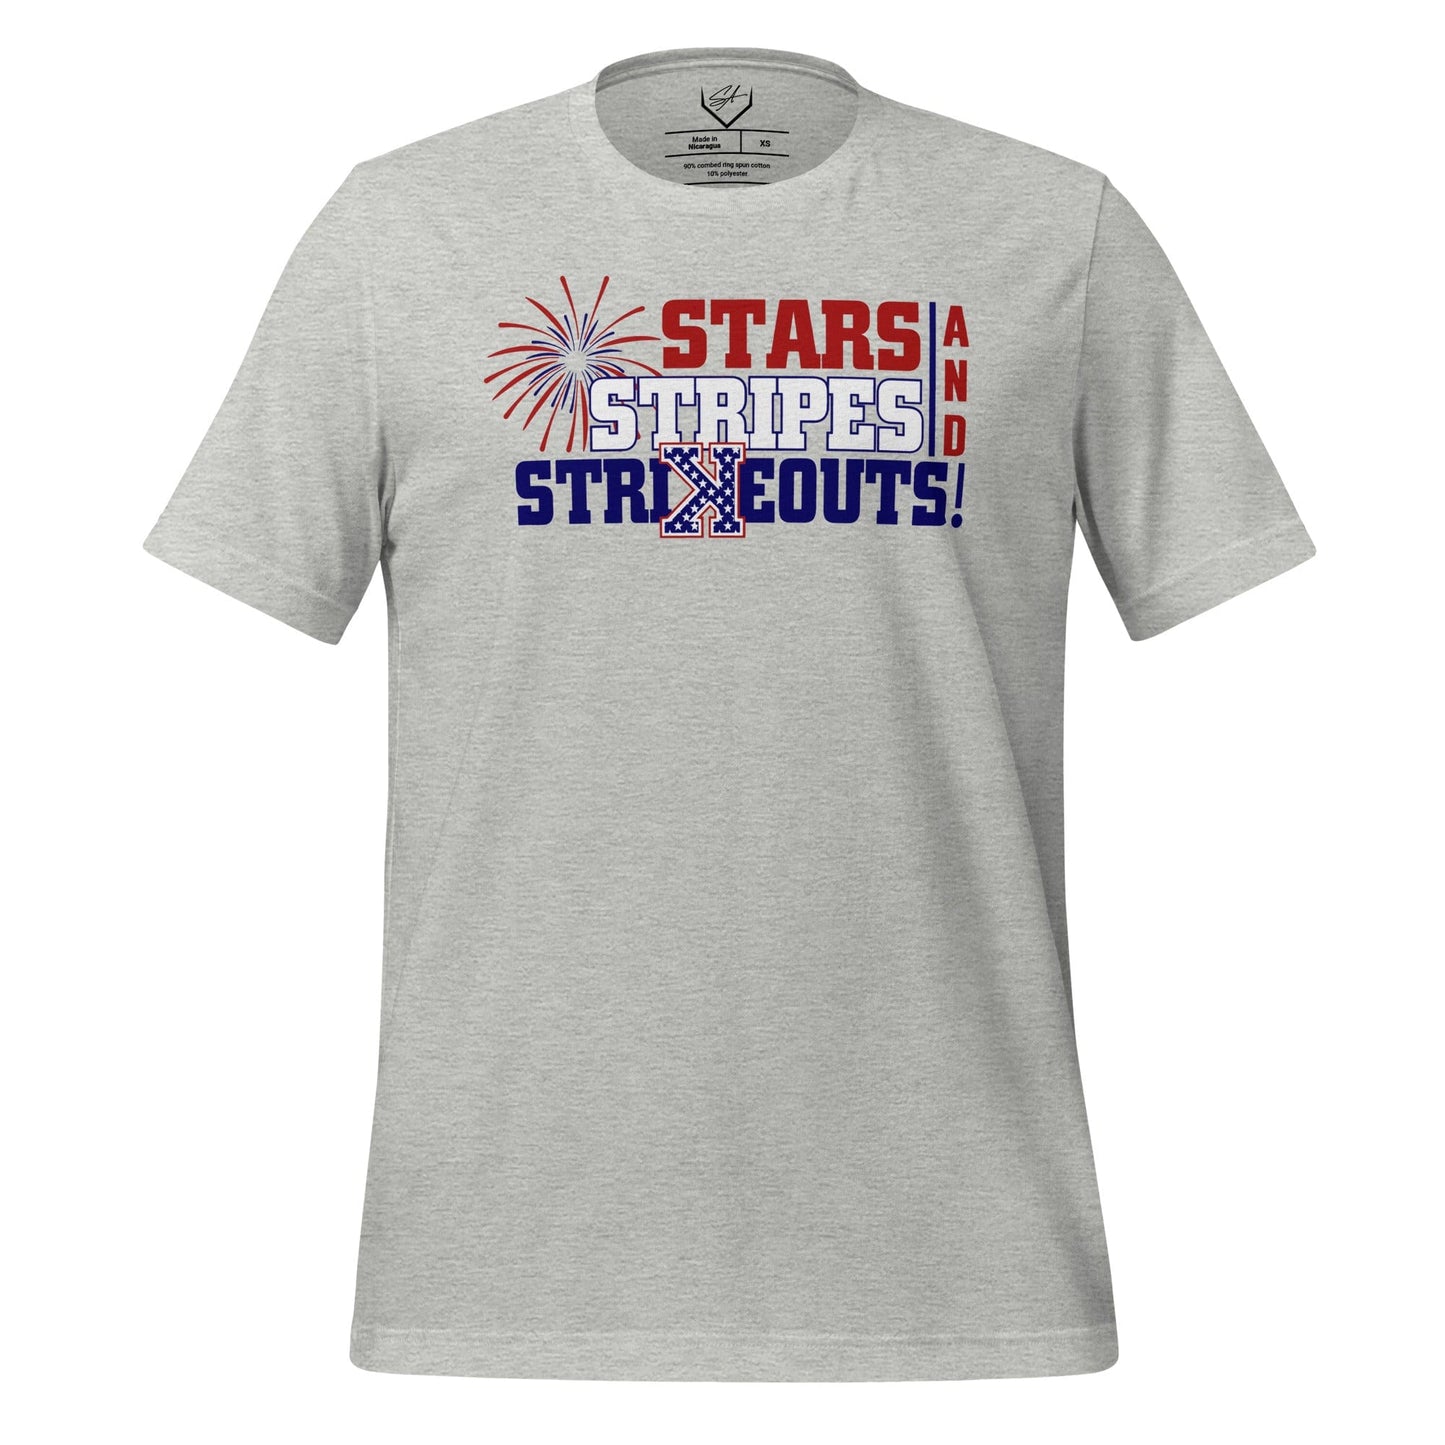 Stars, Stripes, & Strikeouts - Adult Tee